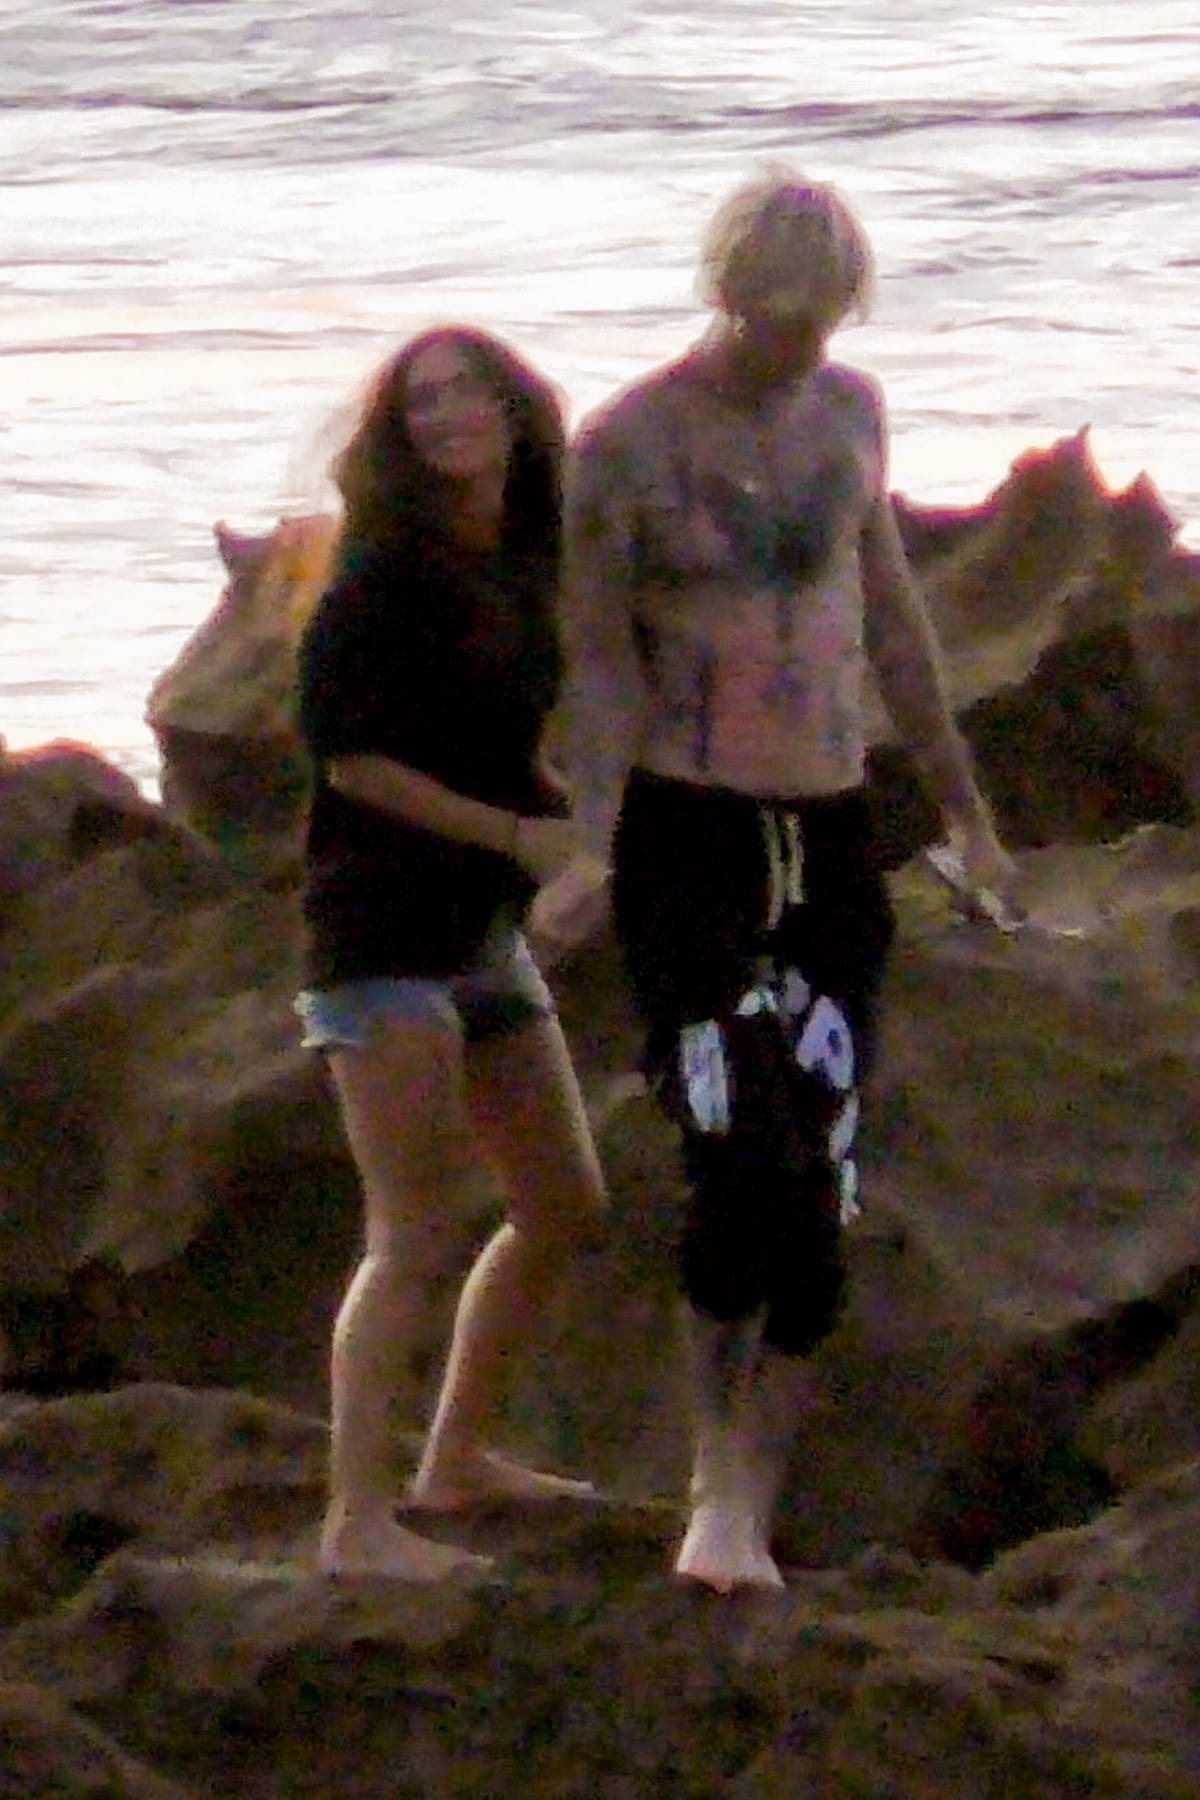 Megan Fox and Machine Gun Kelly go for a romantic stroll on the beach